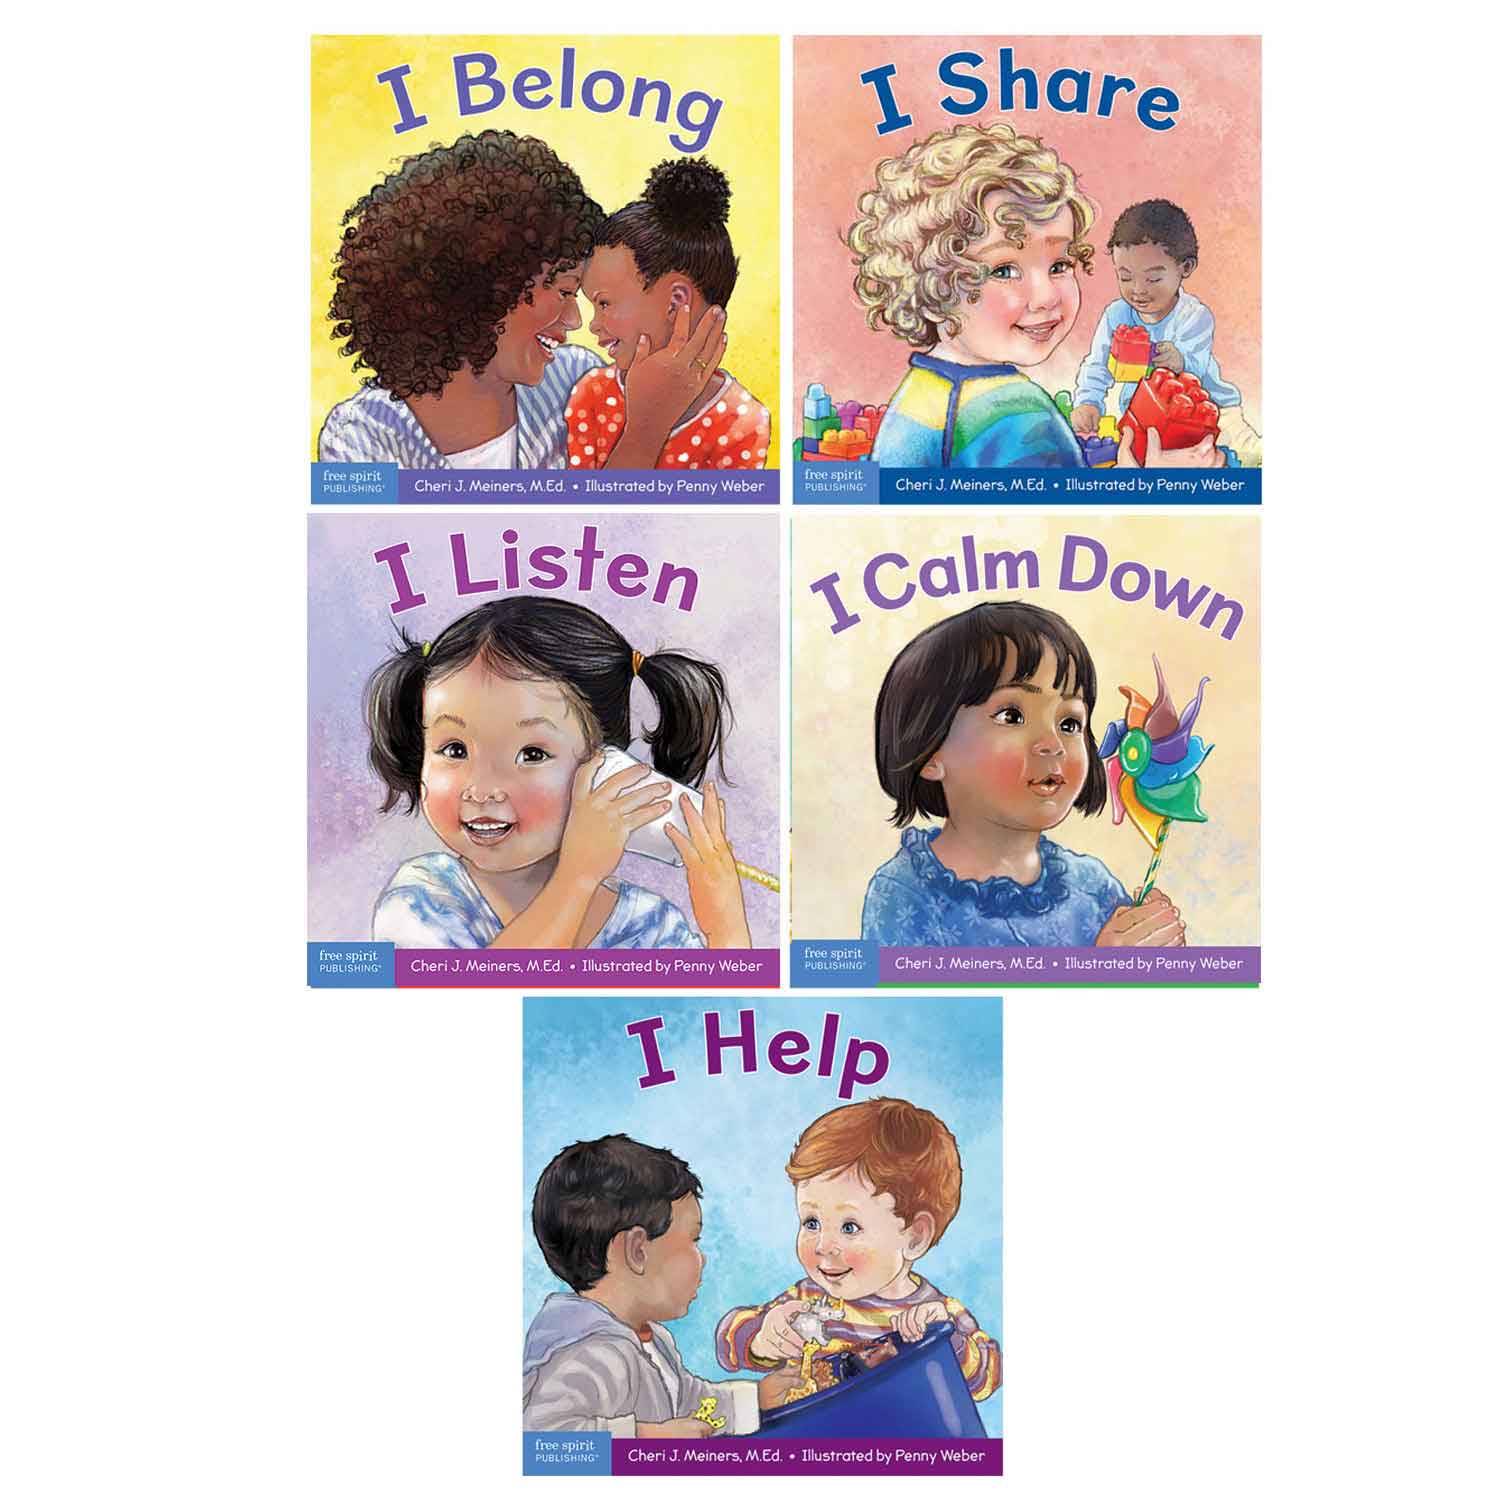 Toddlers Social Skills Board Book Set